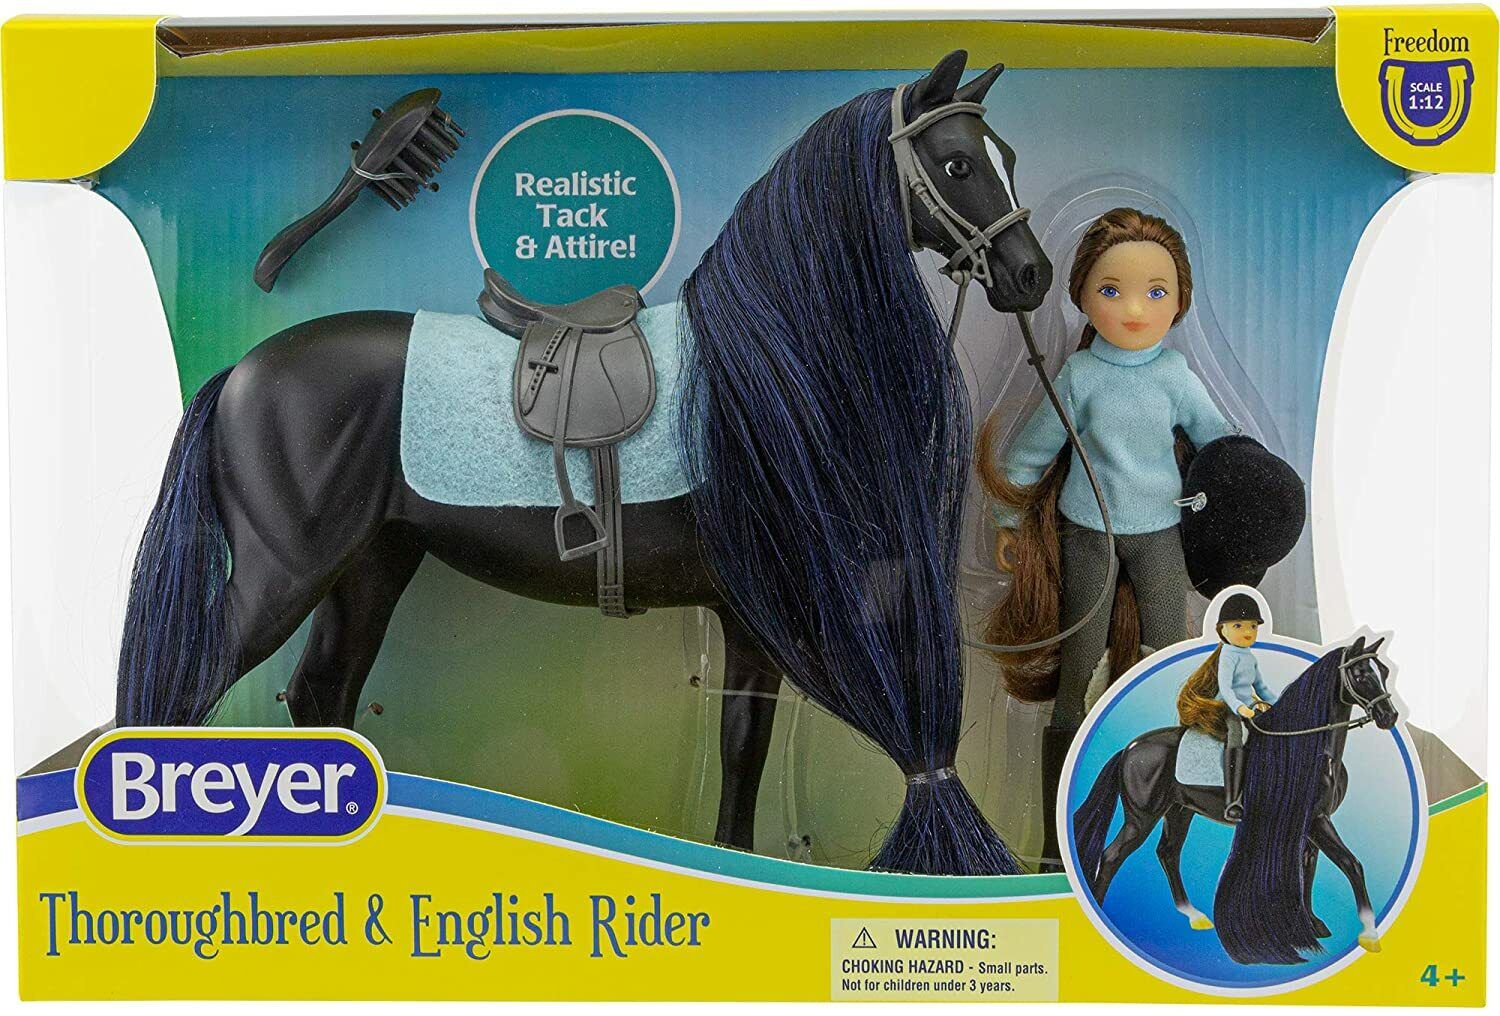 Breyer Horses Freedom Series Jet and English Rider Charlotte Horse Set #61145